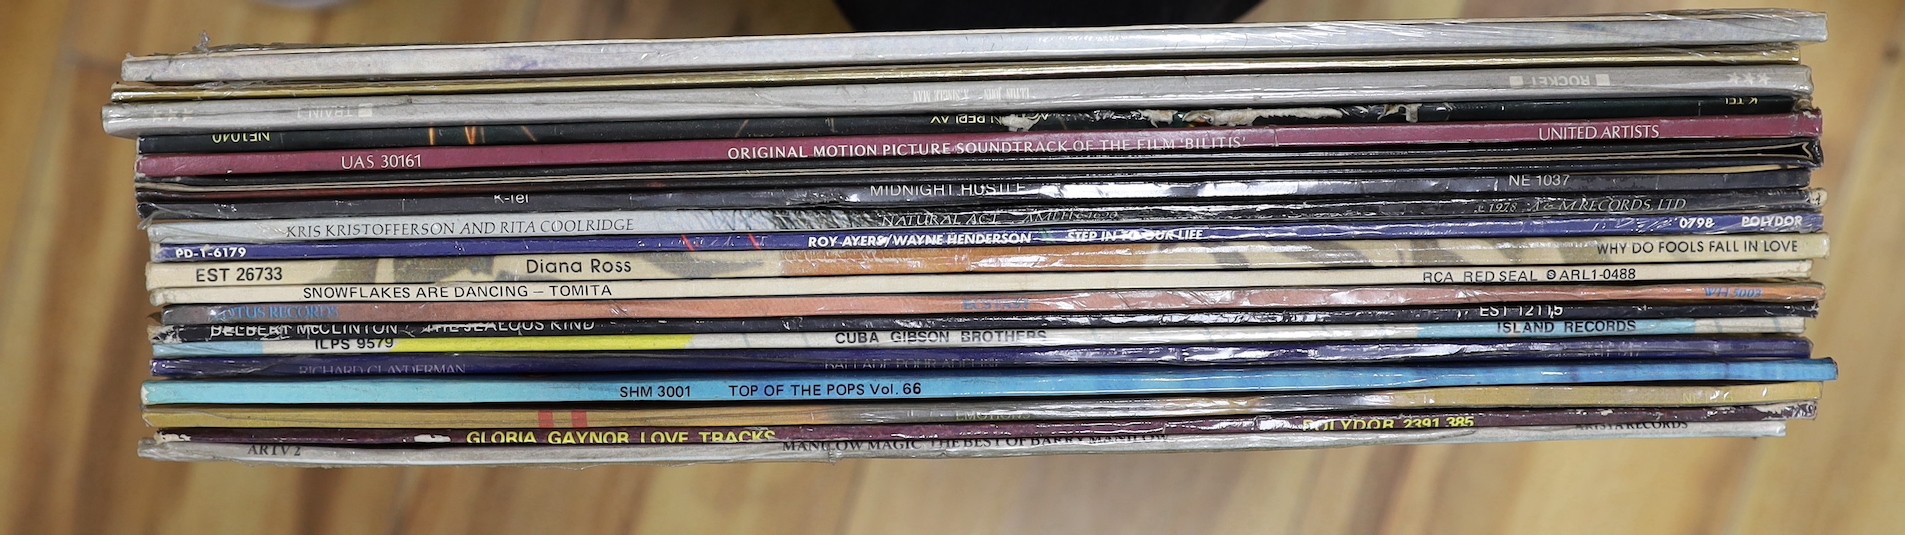 A quantity of vinyl albums and singles